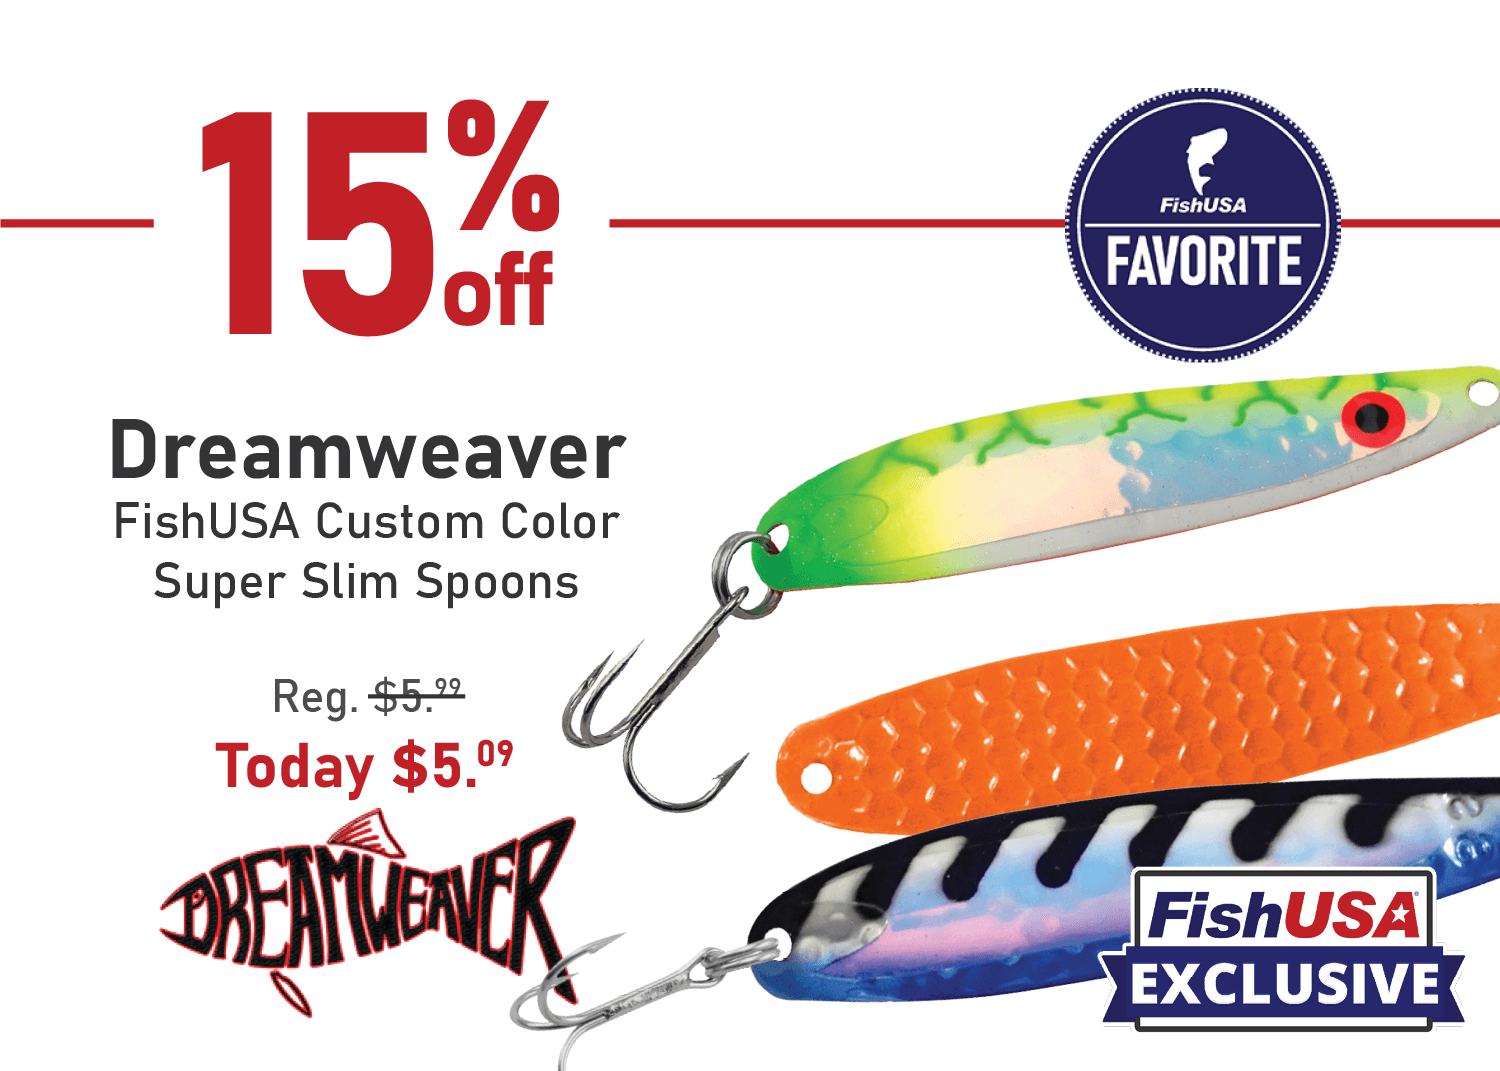 Save 15% on the Dreamweaver FishUSA Custom Color Super Slim Spoon!